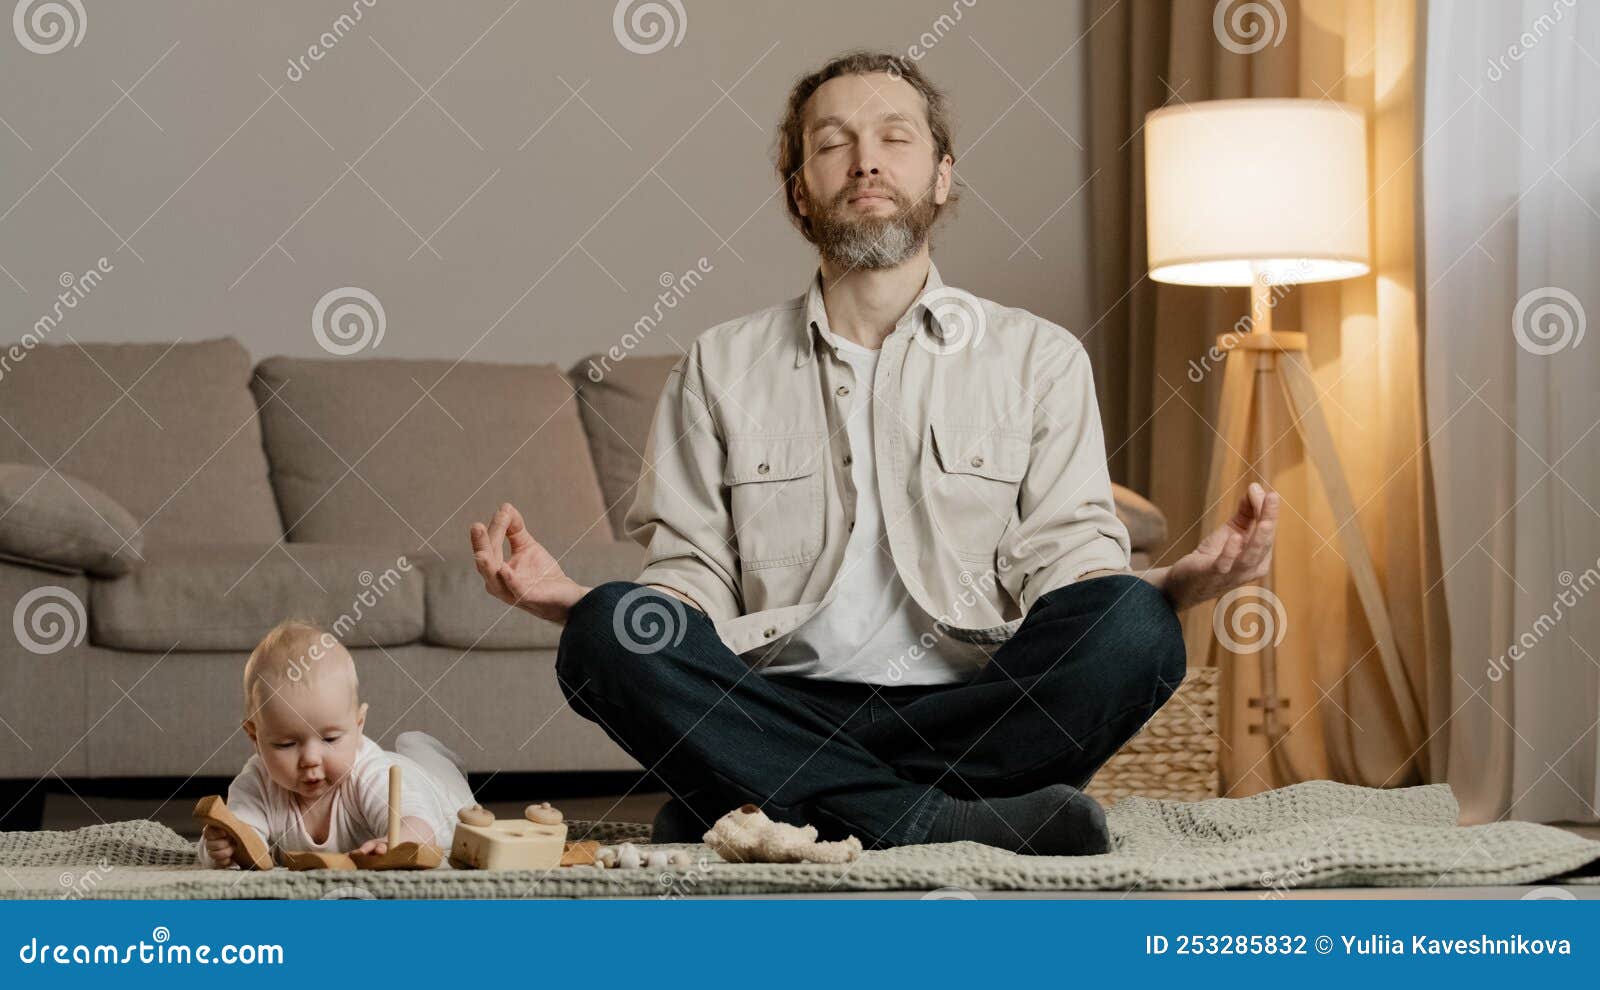 bearded father dad man parent sitting floor lotus position meditating stress relief meditation rest little daughter infant 253285832